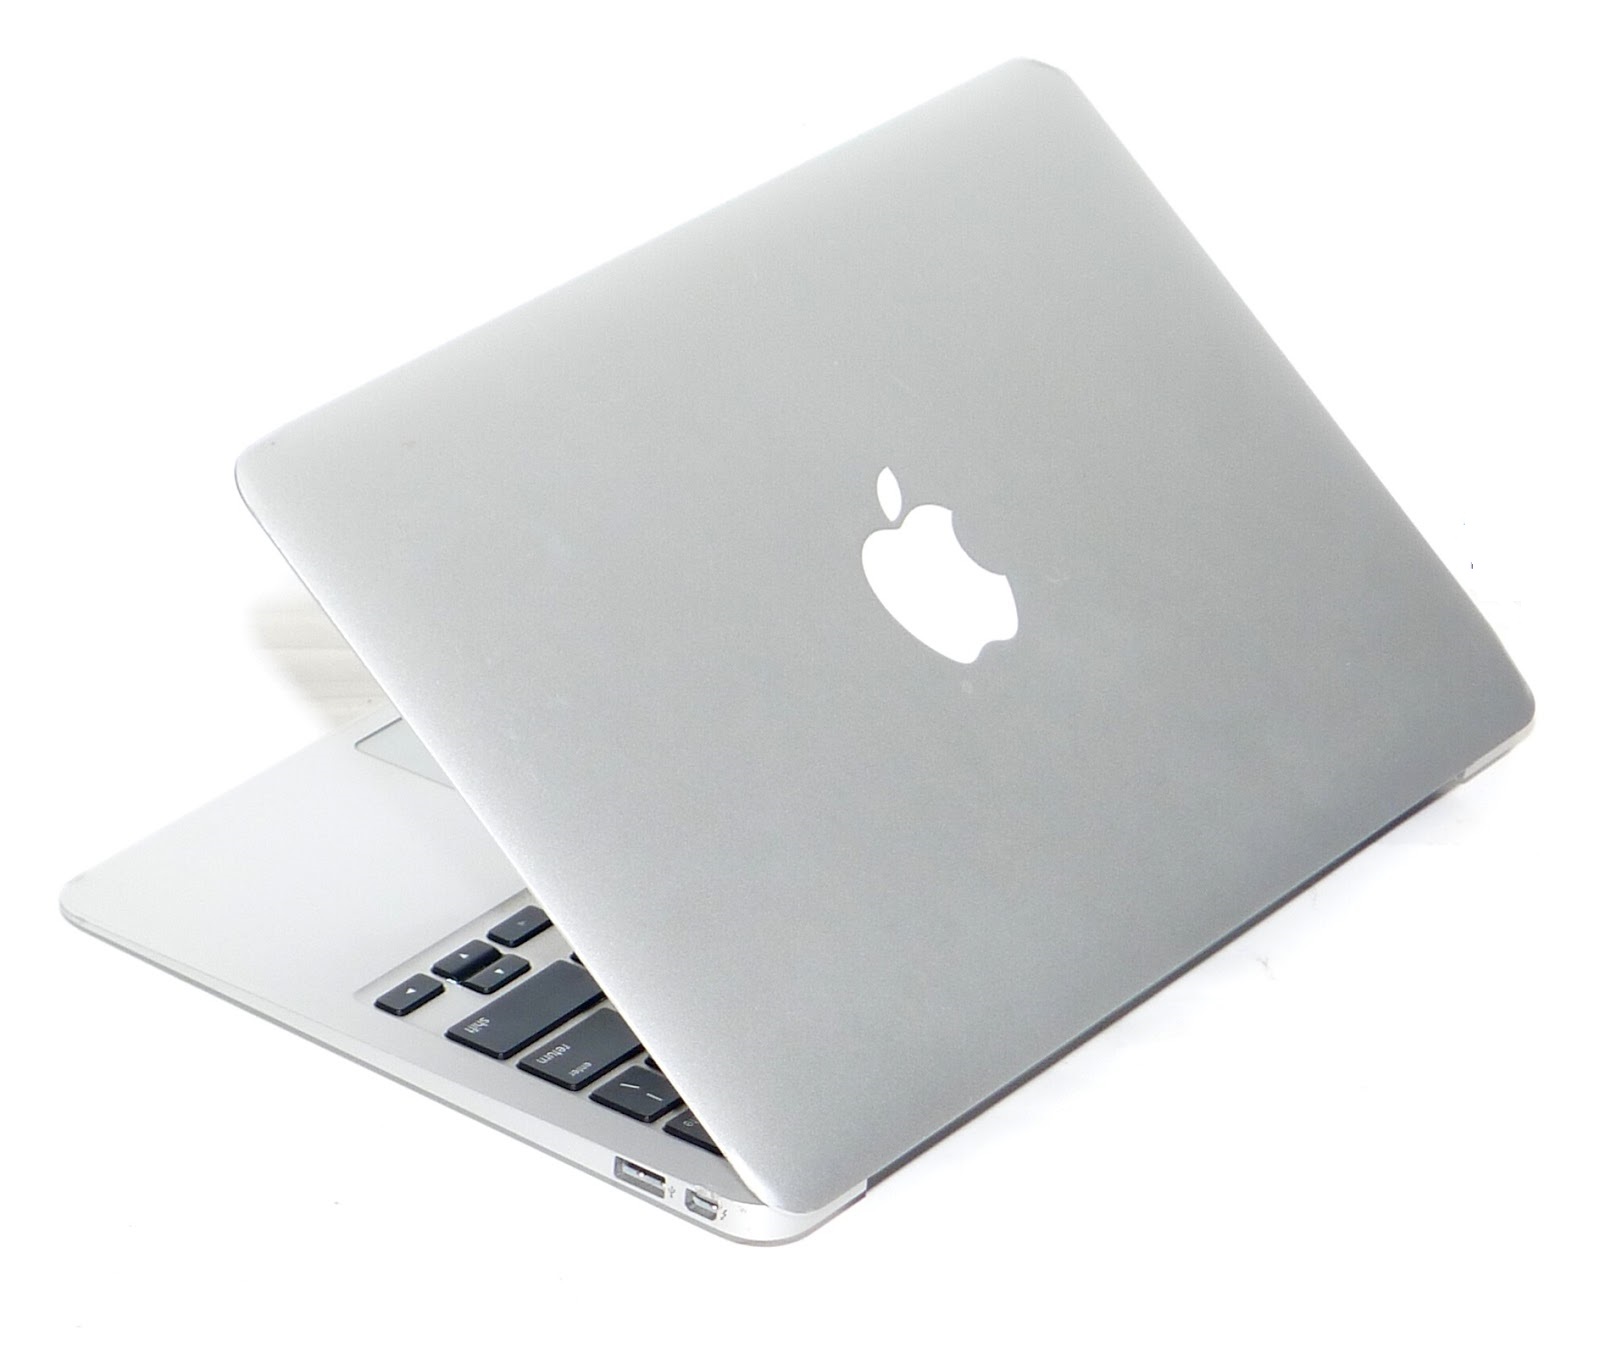 Jual MacBook Air Core i5, 11.6-inchi Mid 2011 Second | Jual Beli Laptop